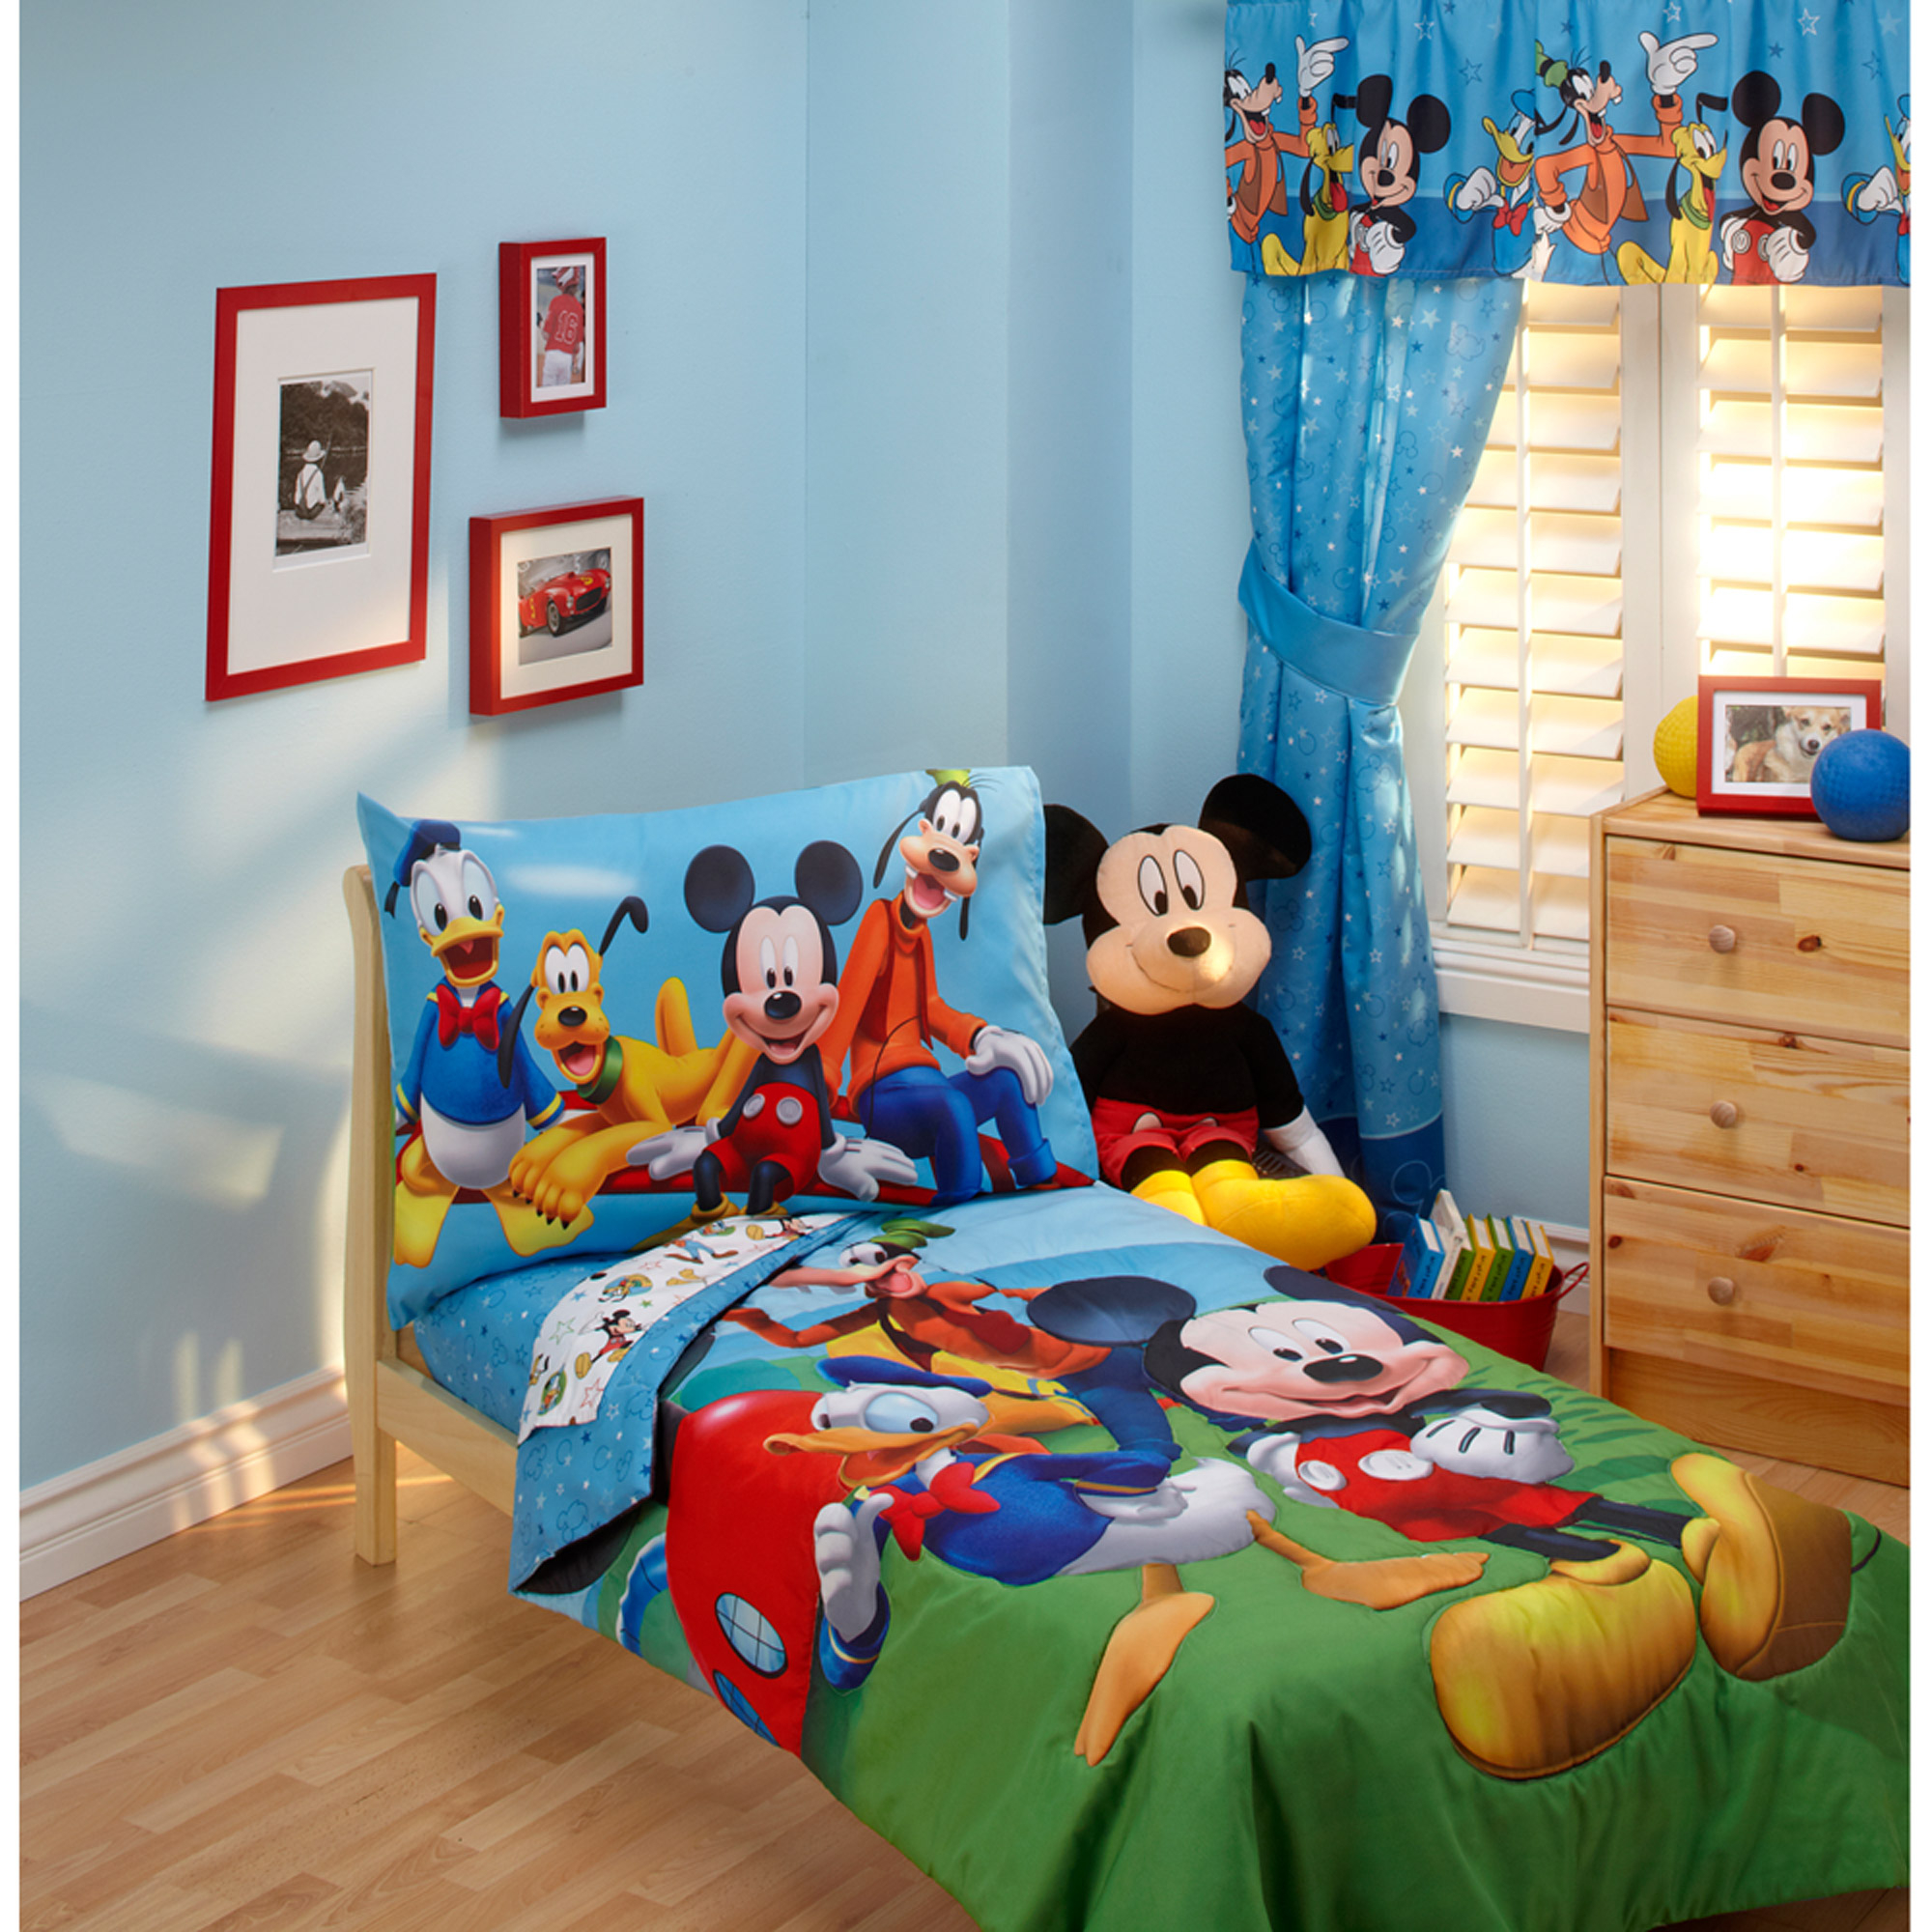 Disney Mickey Mouse Toddler Bedding Set Comforter Sheets Pillow Case Lot 